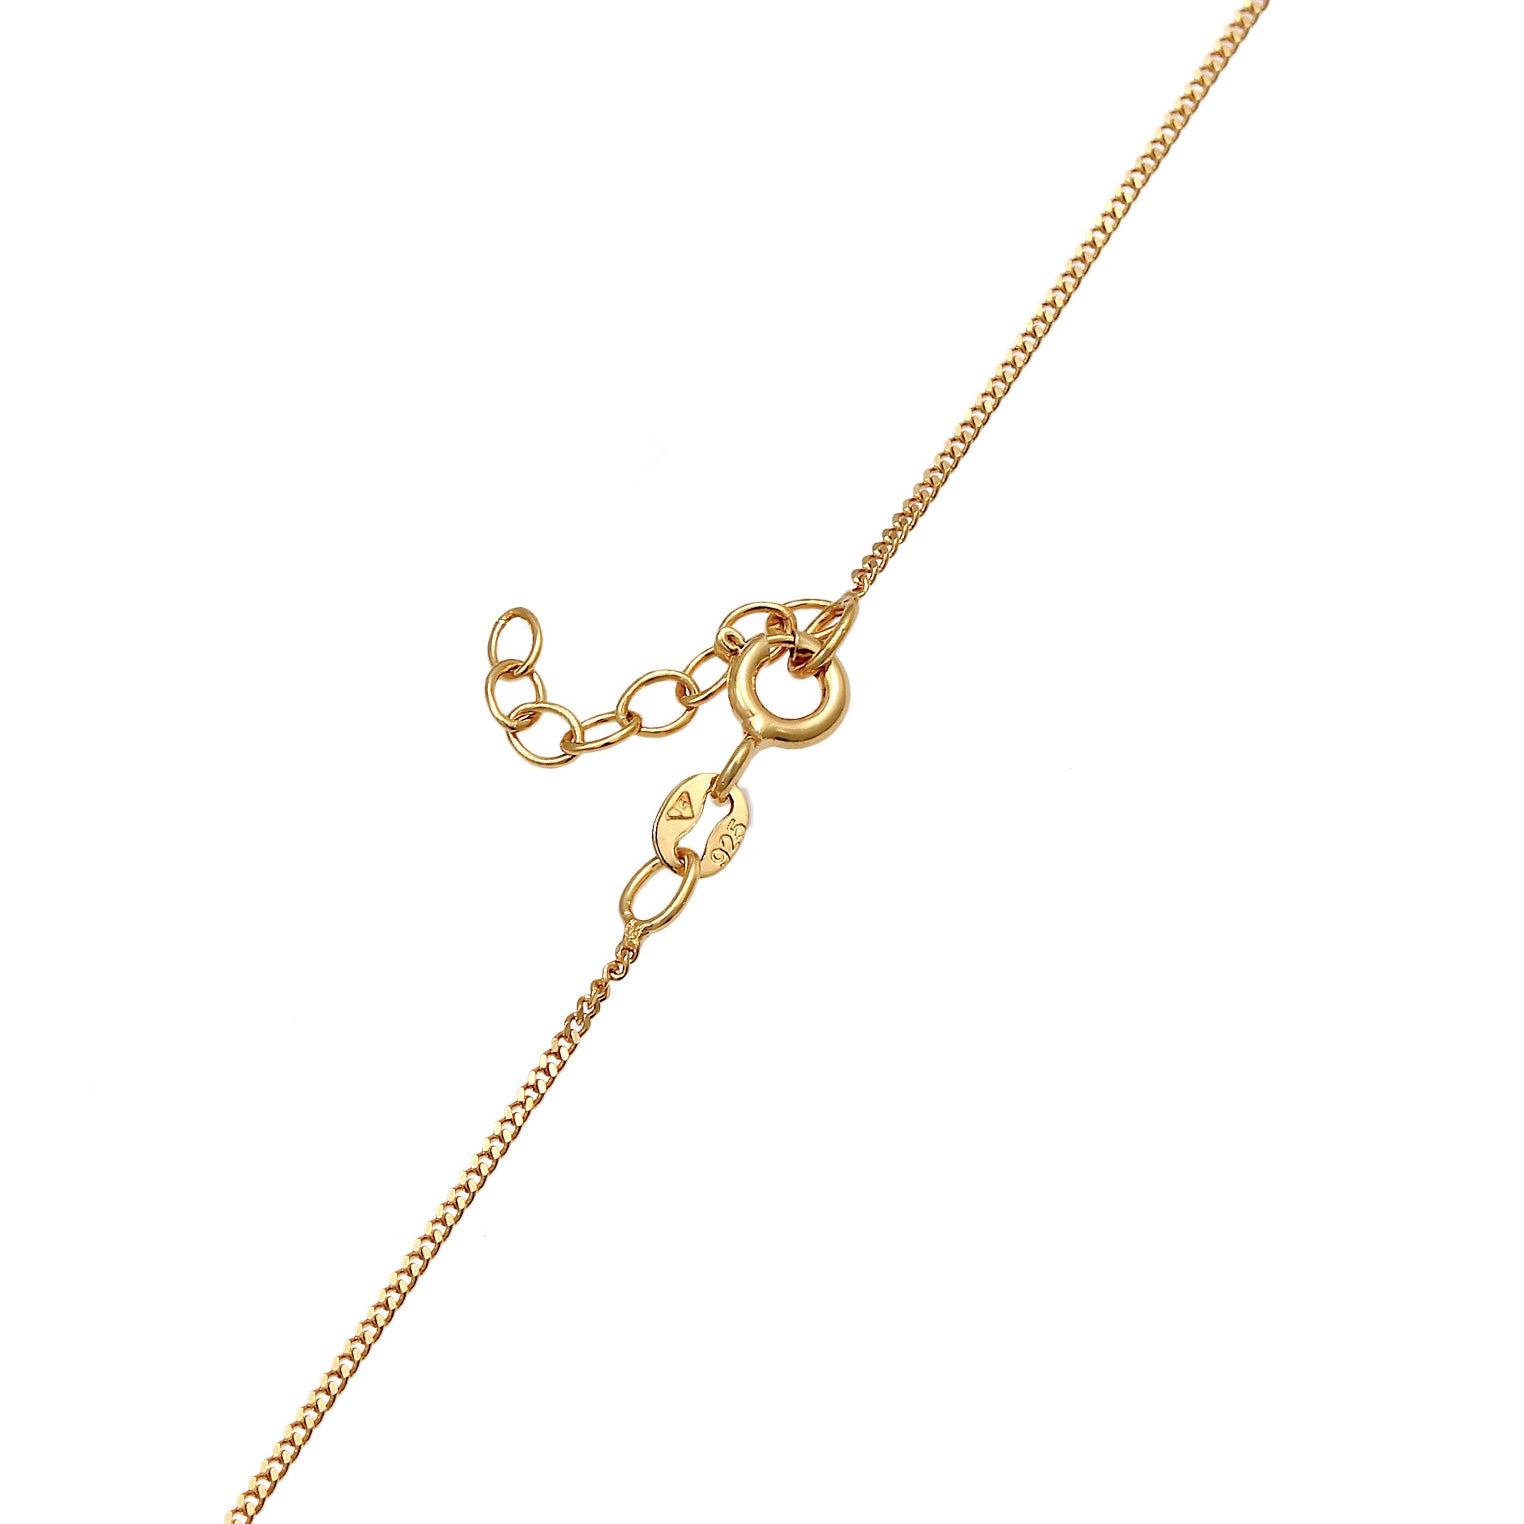 Gold - Elli | Halskette Süßigkeiten | 925 Sterling Silber vergoldet